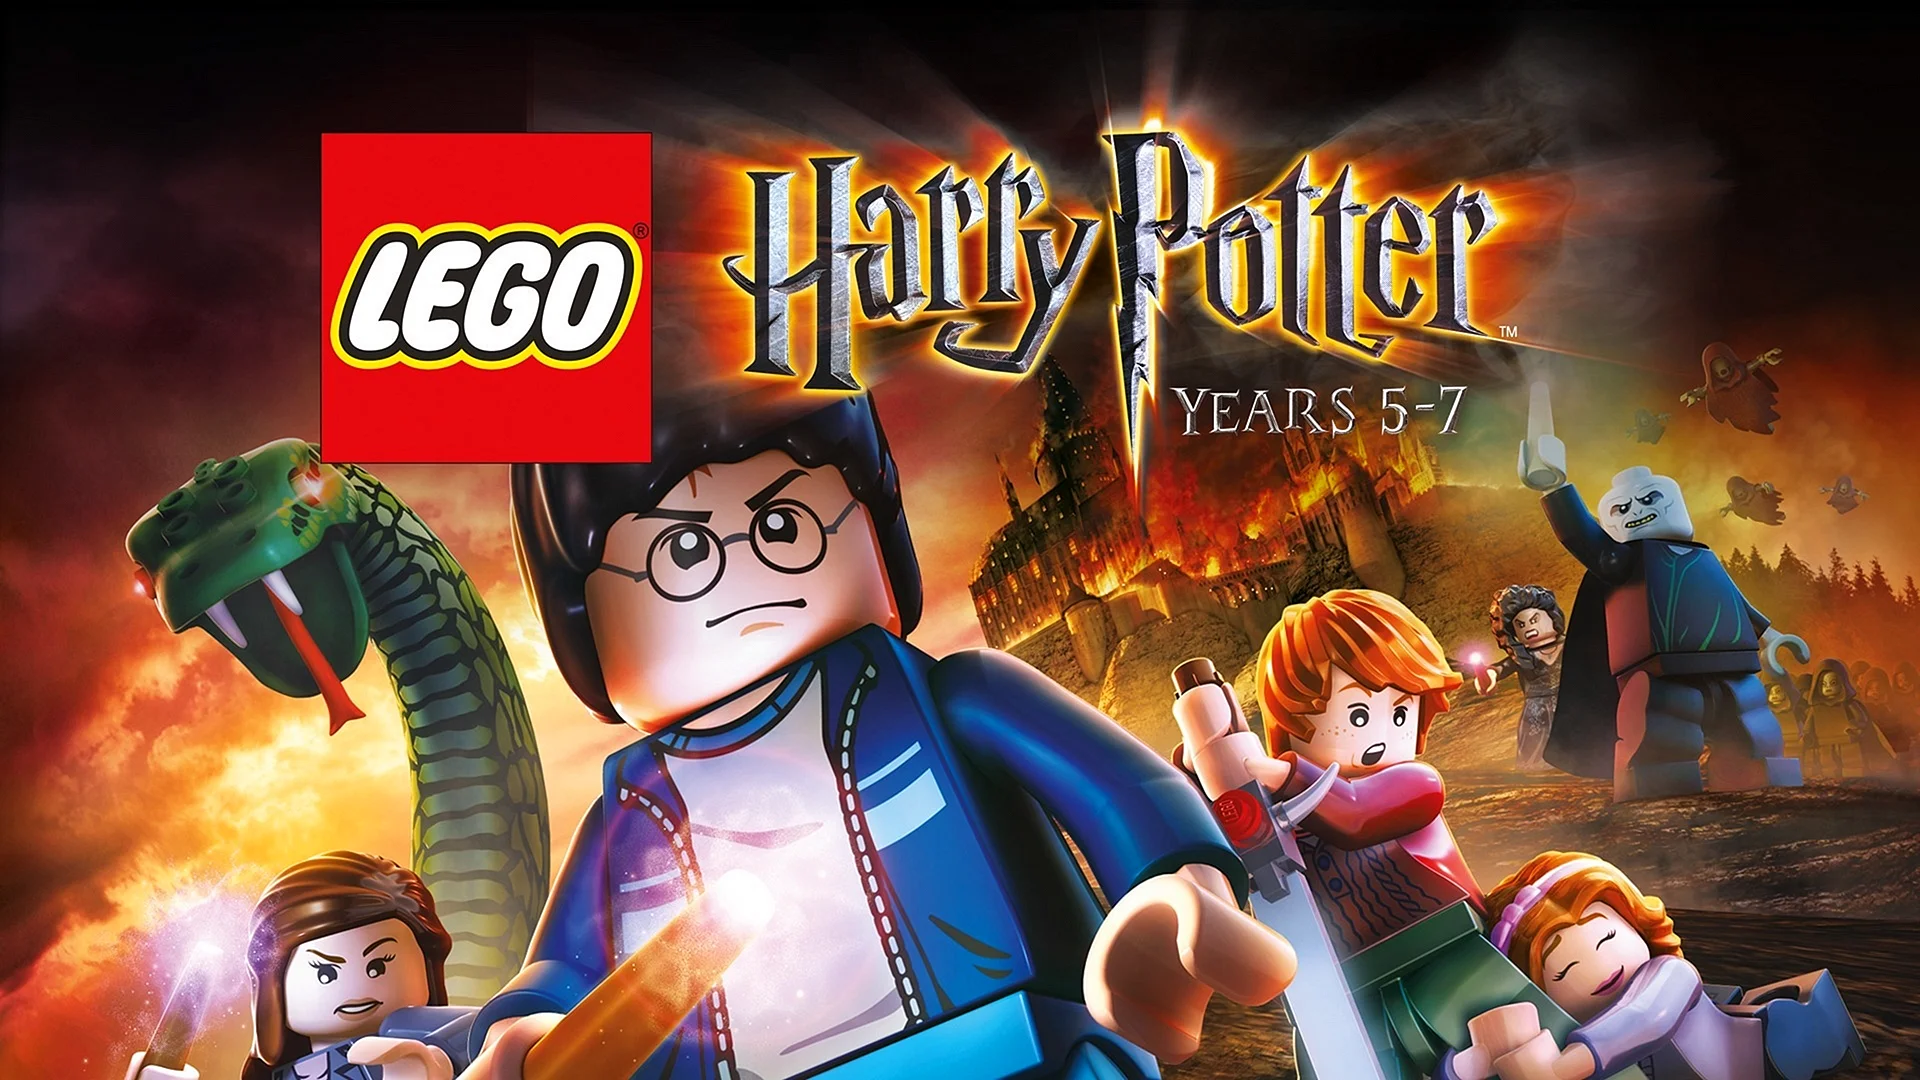 Lego Harry Potter Years 5-7 Wallpaper